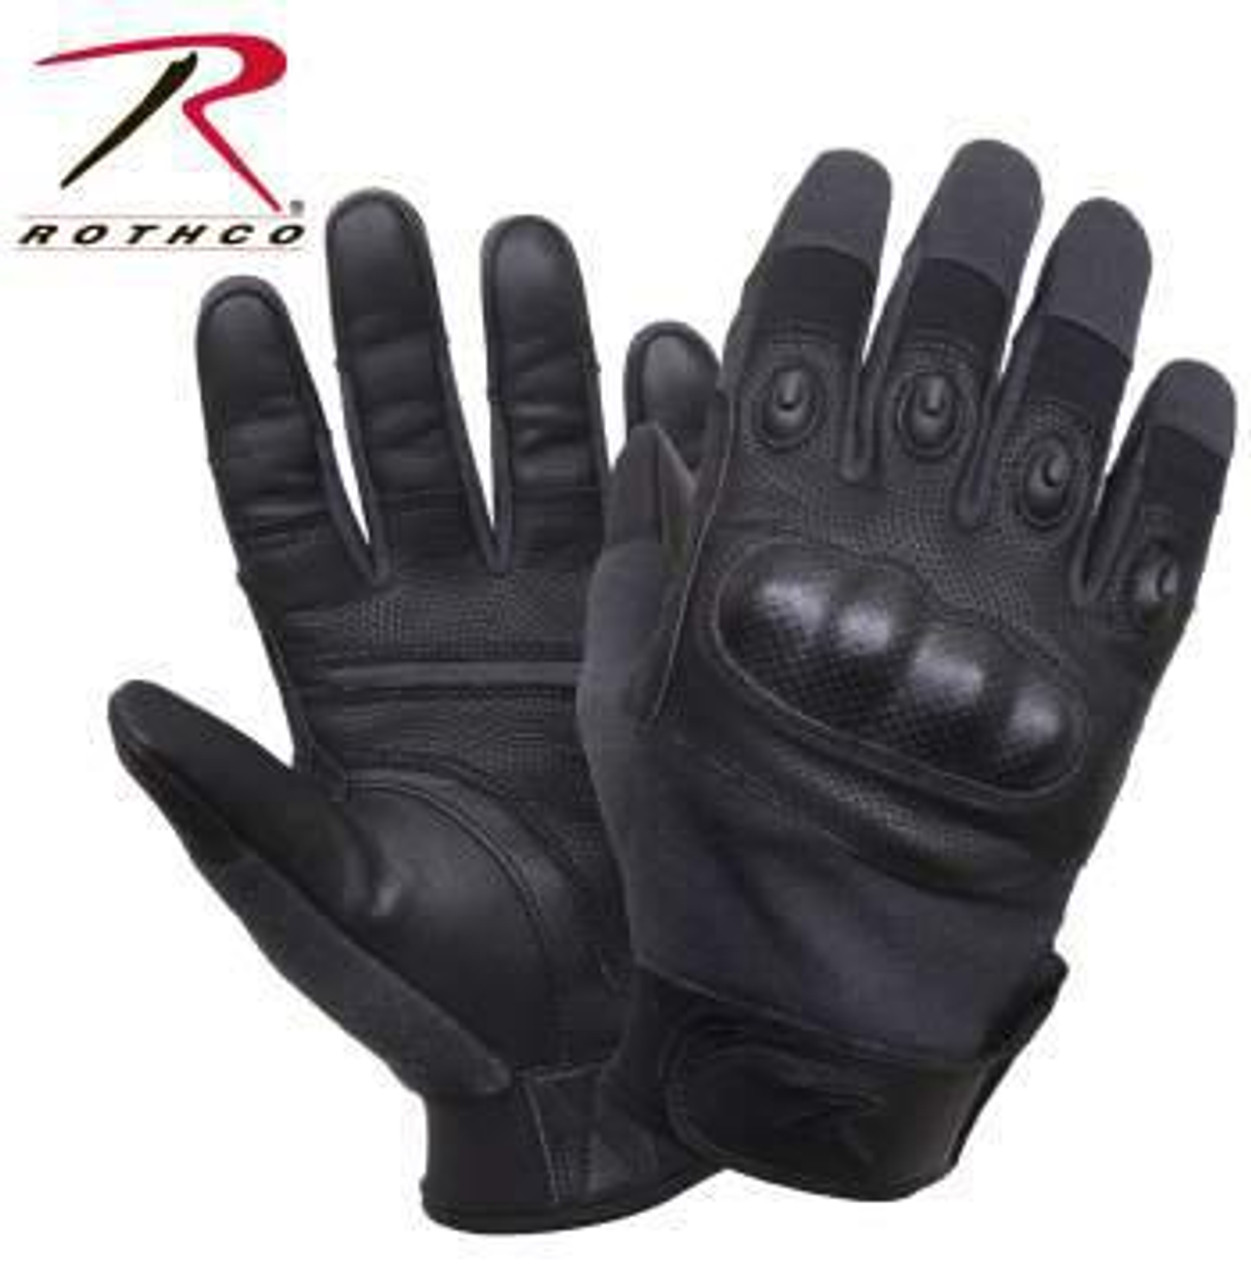 Rothco Carbon Fiber Hard Knuckle Cut/Fire Resistant Gloves | Black